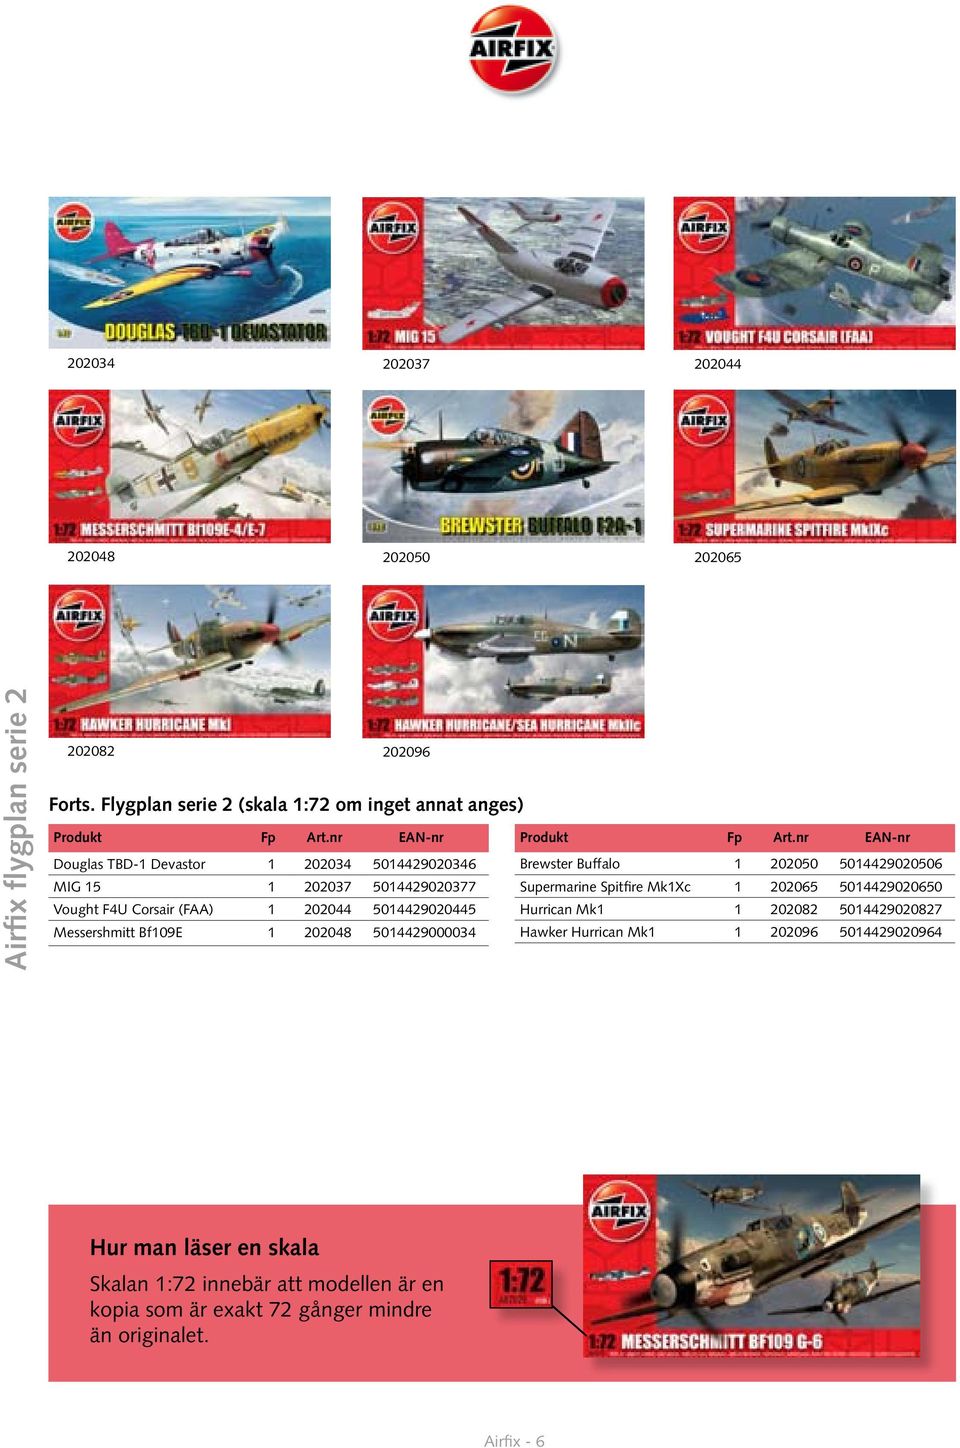 202037 5014429020377 Supermarine Spitfire Mk1Xc 1 202065 5014429020650 Vought F4U Corsair (FAA) 1 202044 5014429020445 Hurrican Mk1 1 202082